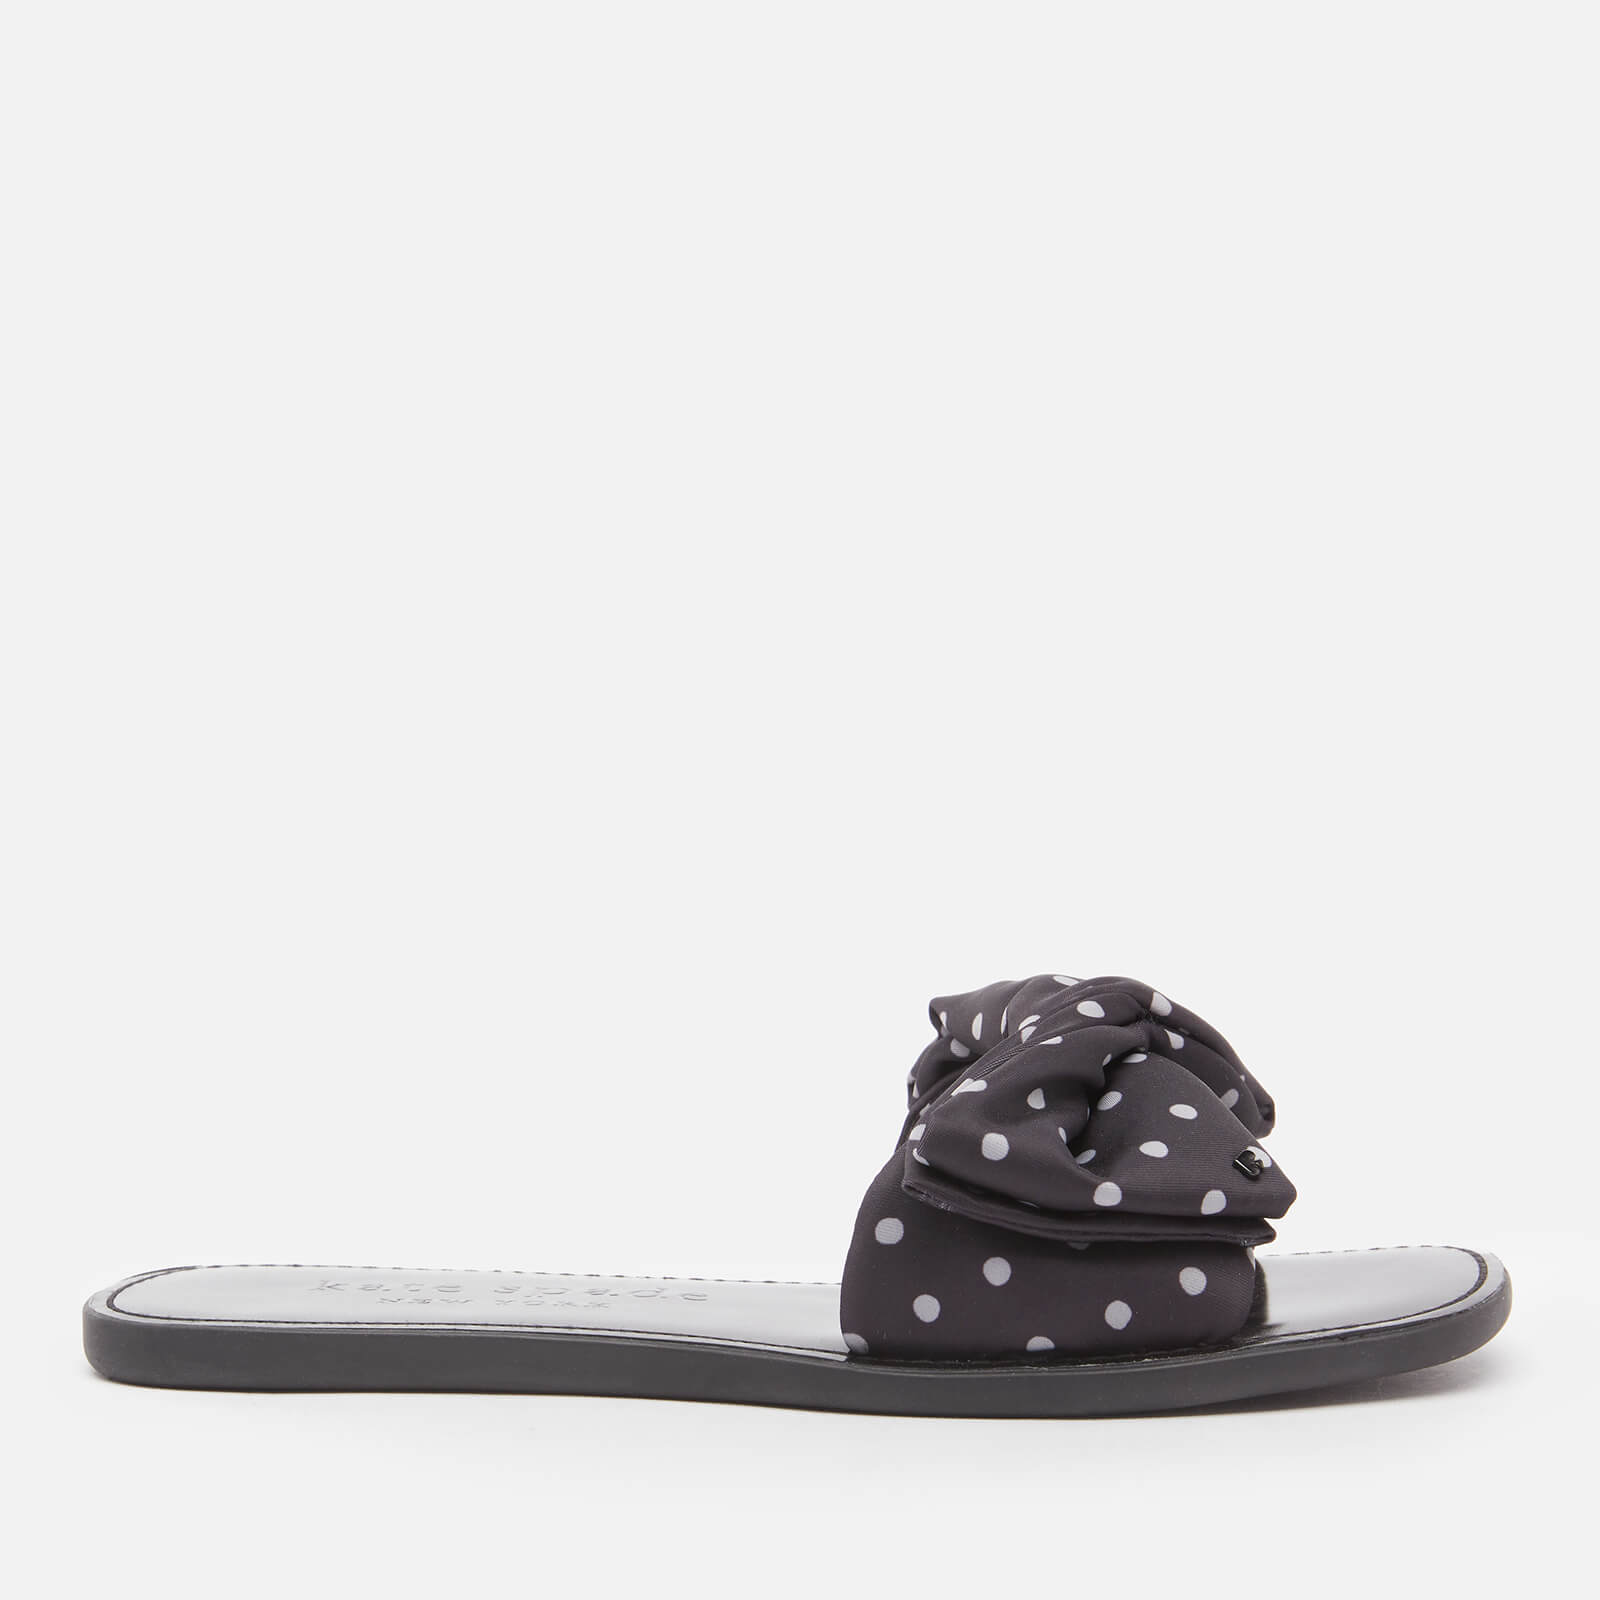 Kate Spade New York Women's Bikini Slide Sandals - Black/Cream - UK 4